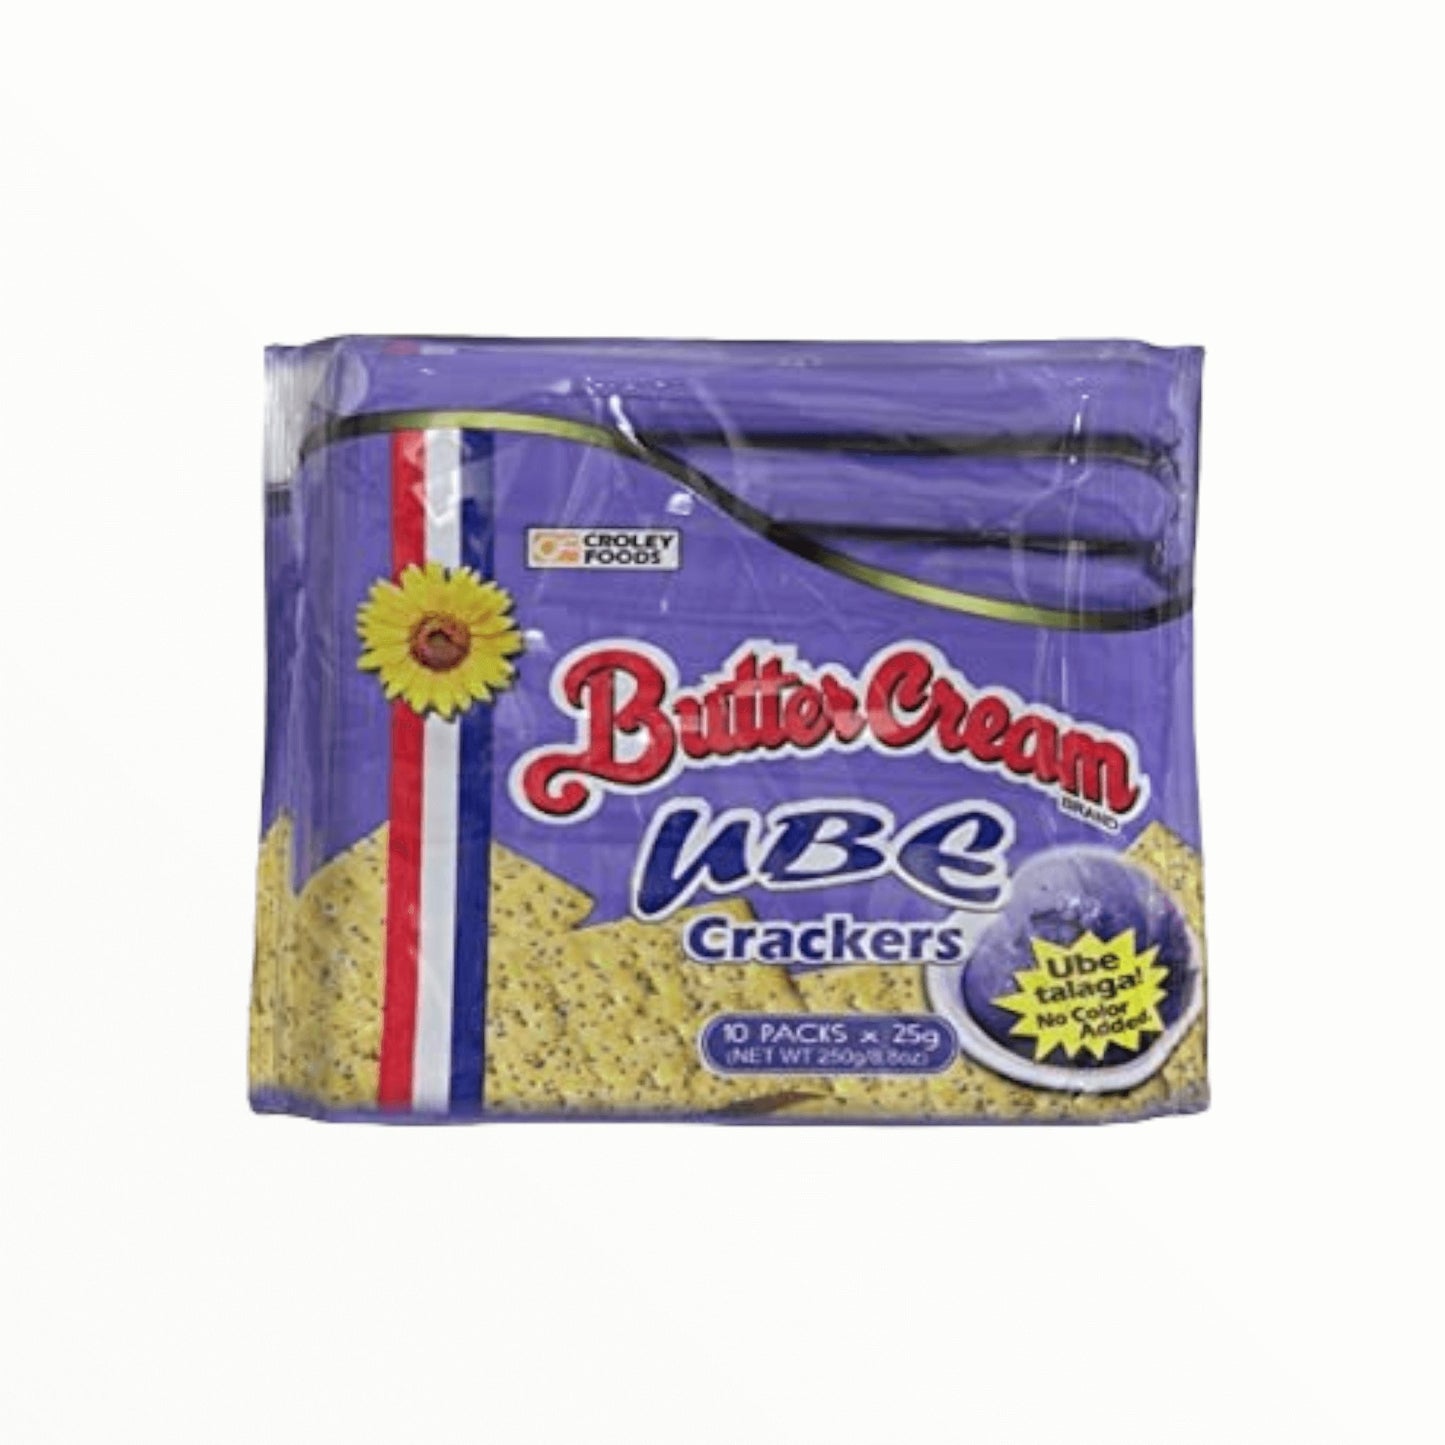 Butter Cream Ube Crackers 250g - Mabuhay Pinoy Asia Shop